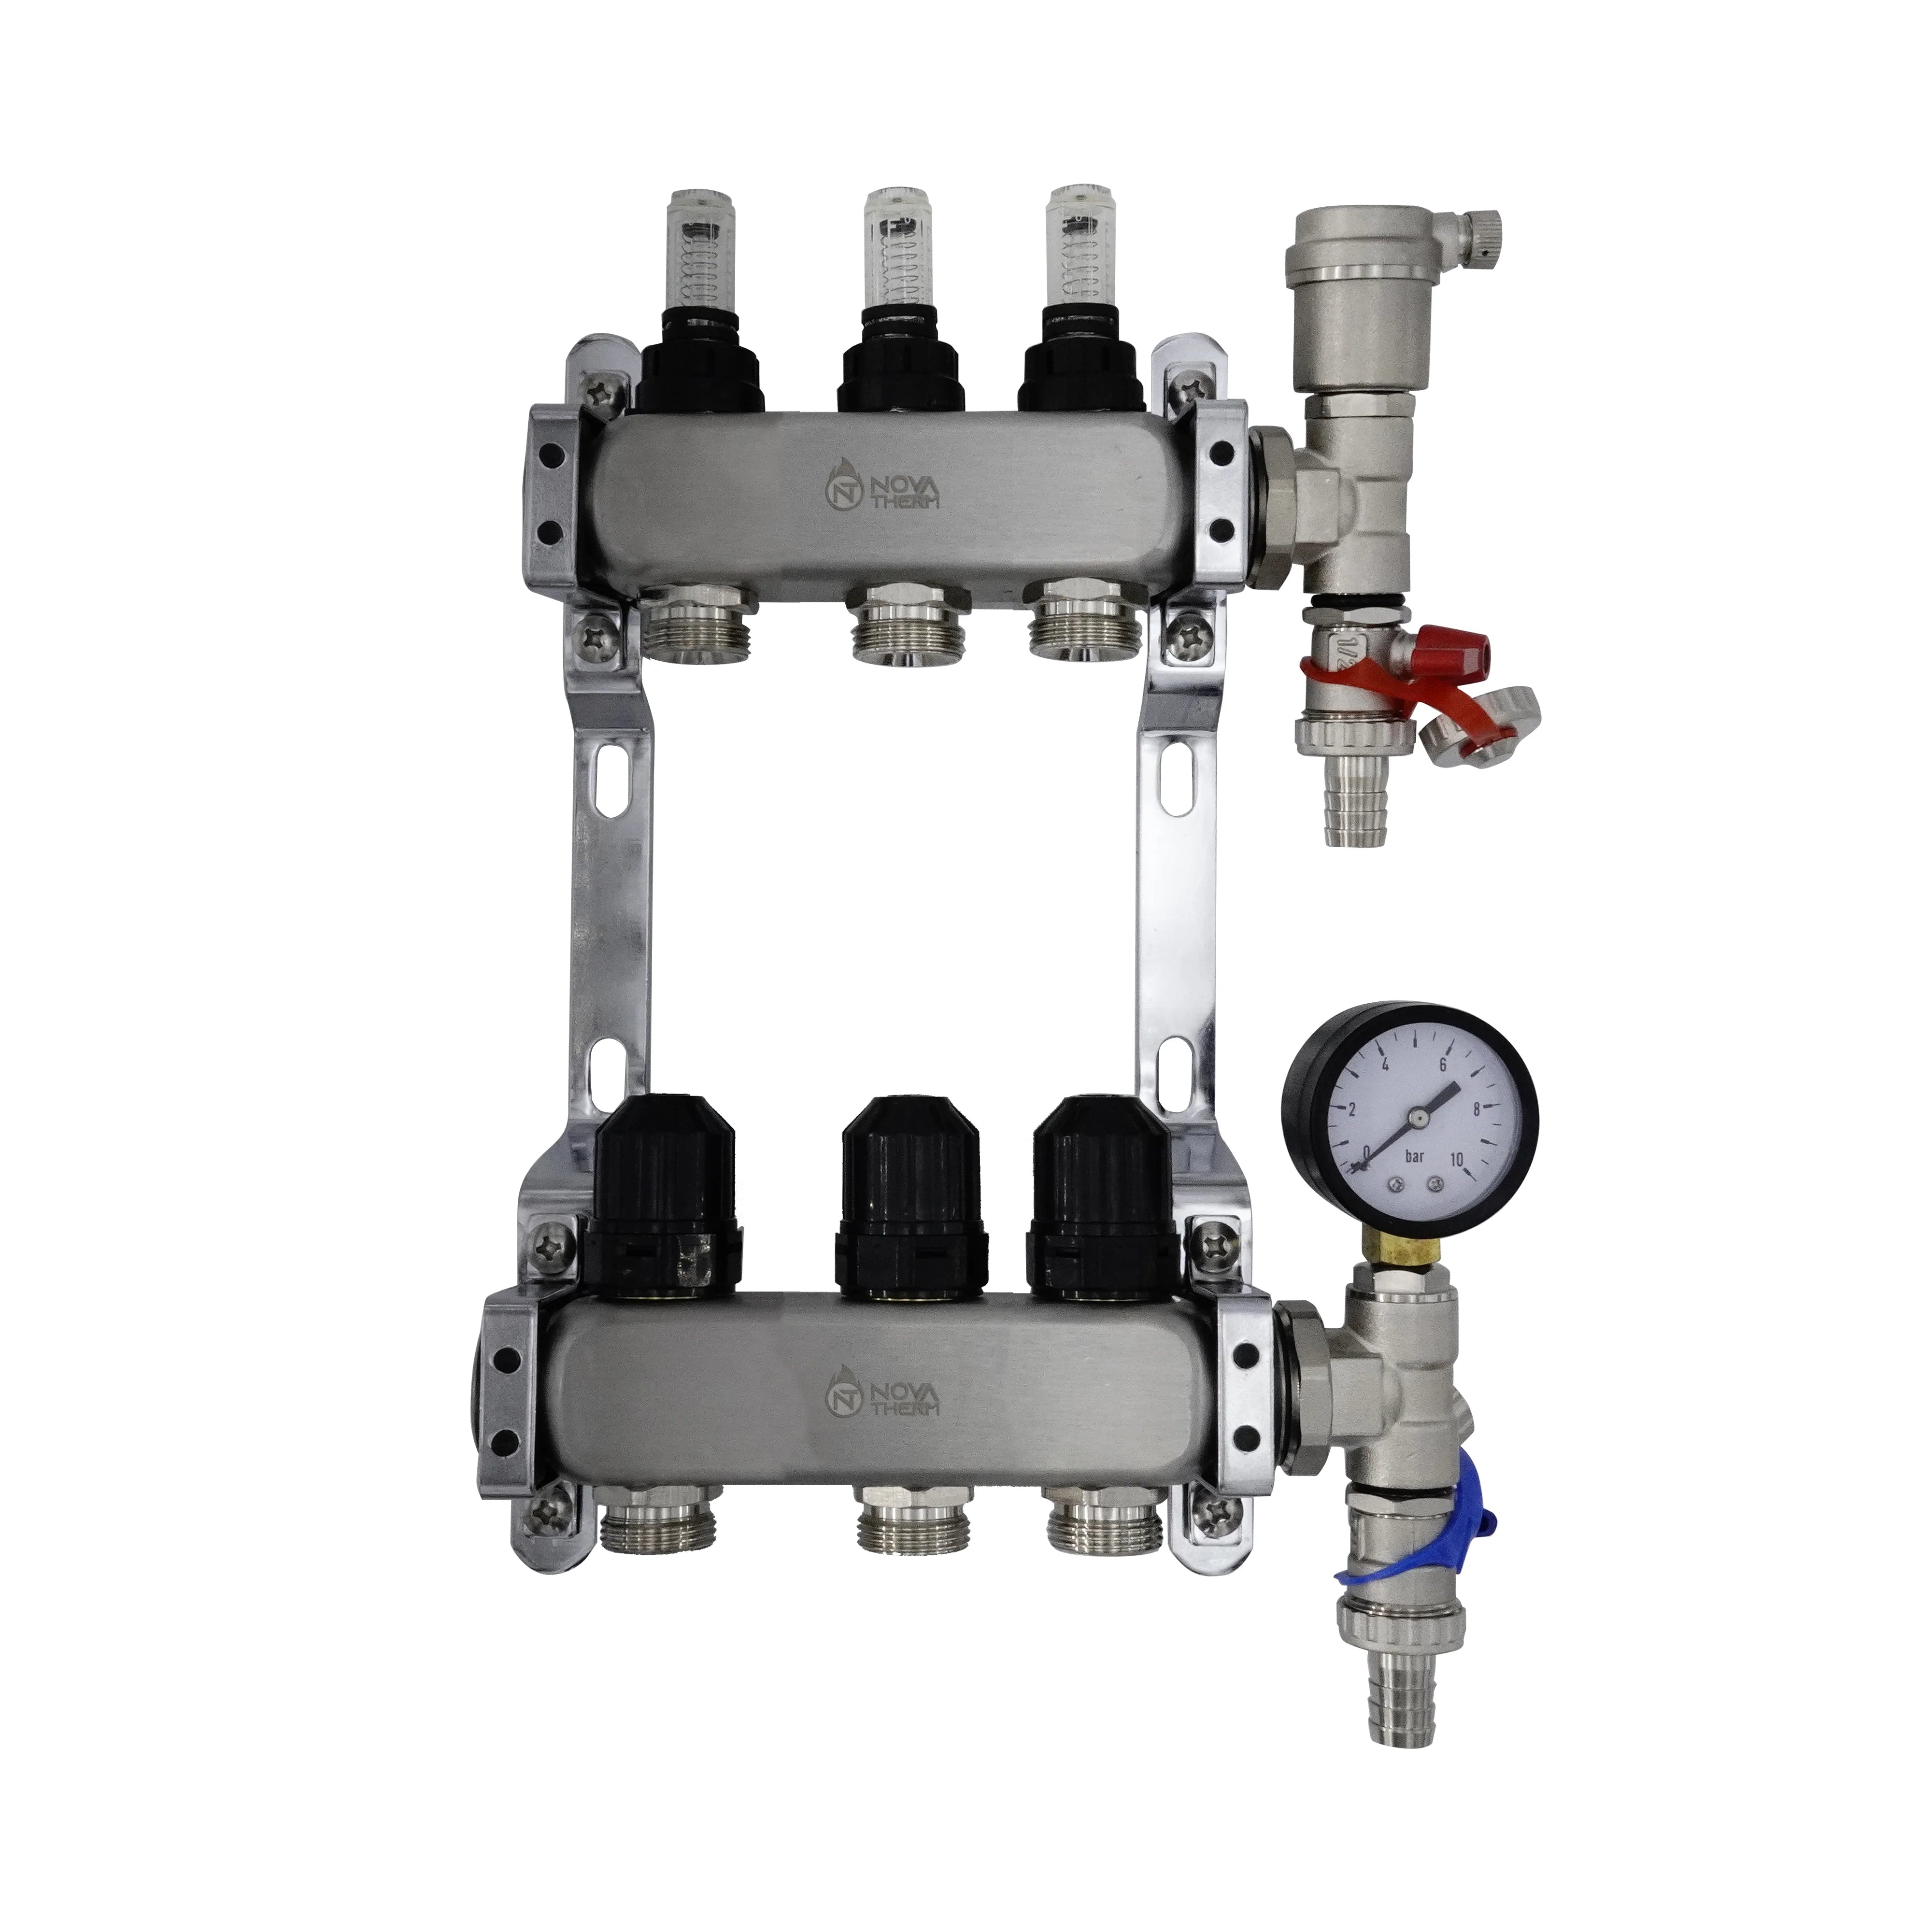 NovaTherm 50sqm multi-zone Water Underfloor Heating Kit